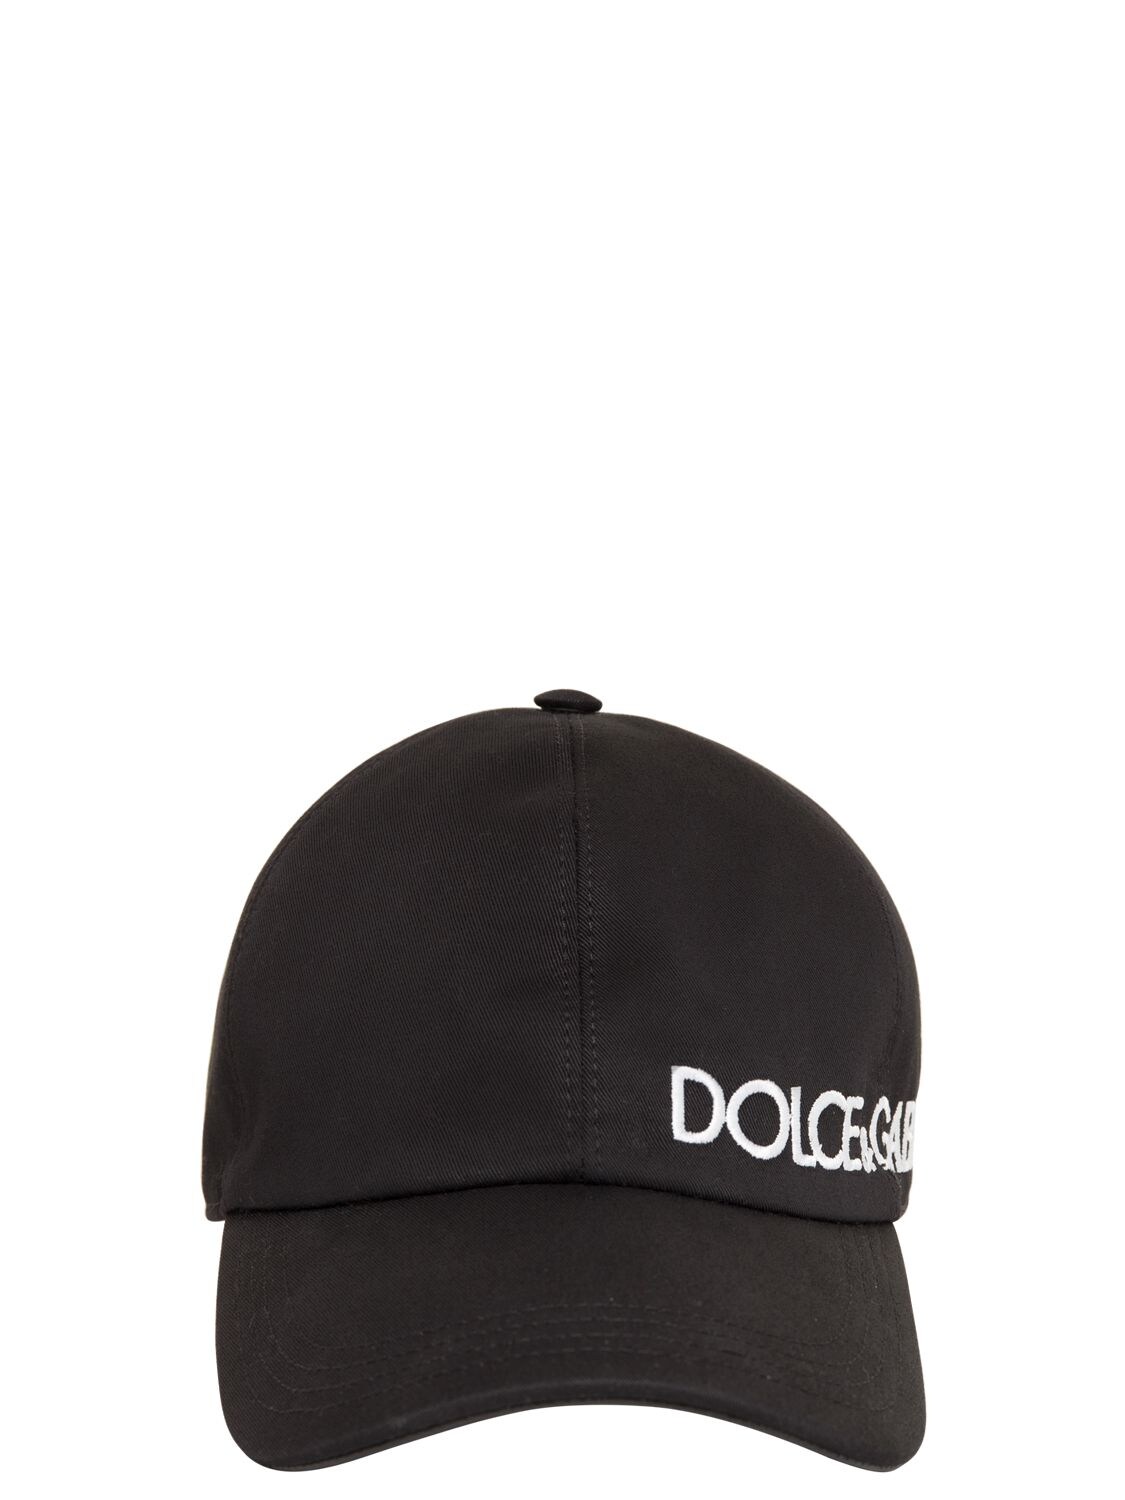 DOLCE & GABBANA LOGO刺绣棉质棒球帽,72IG2G006-TJAWMDA1